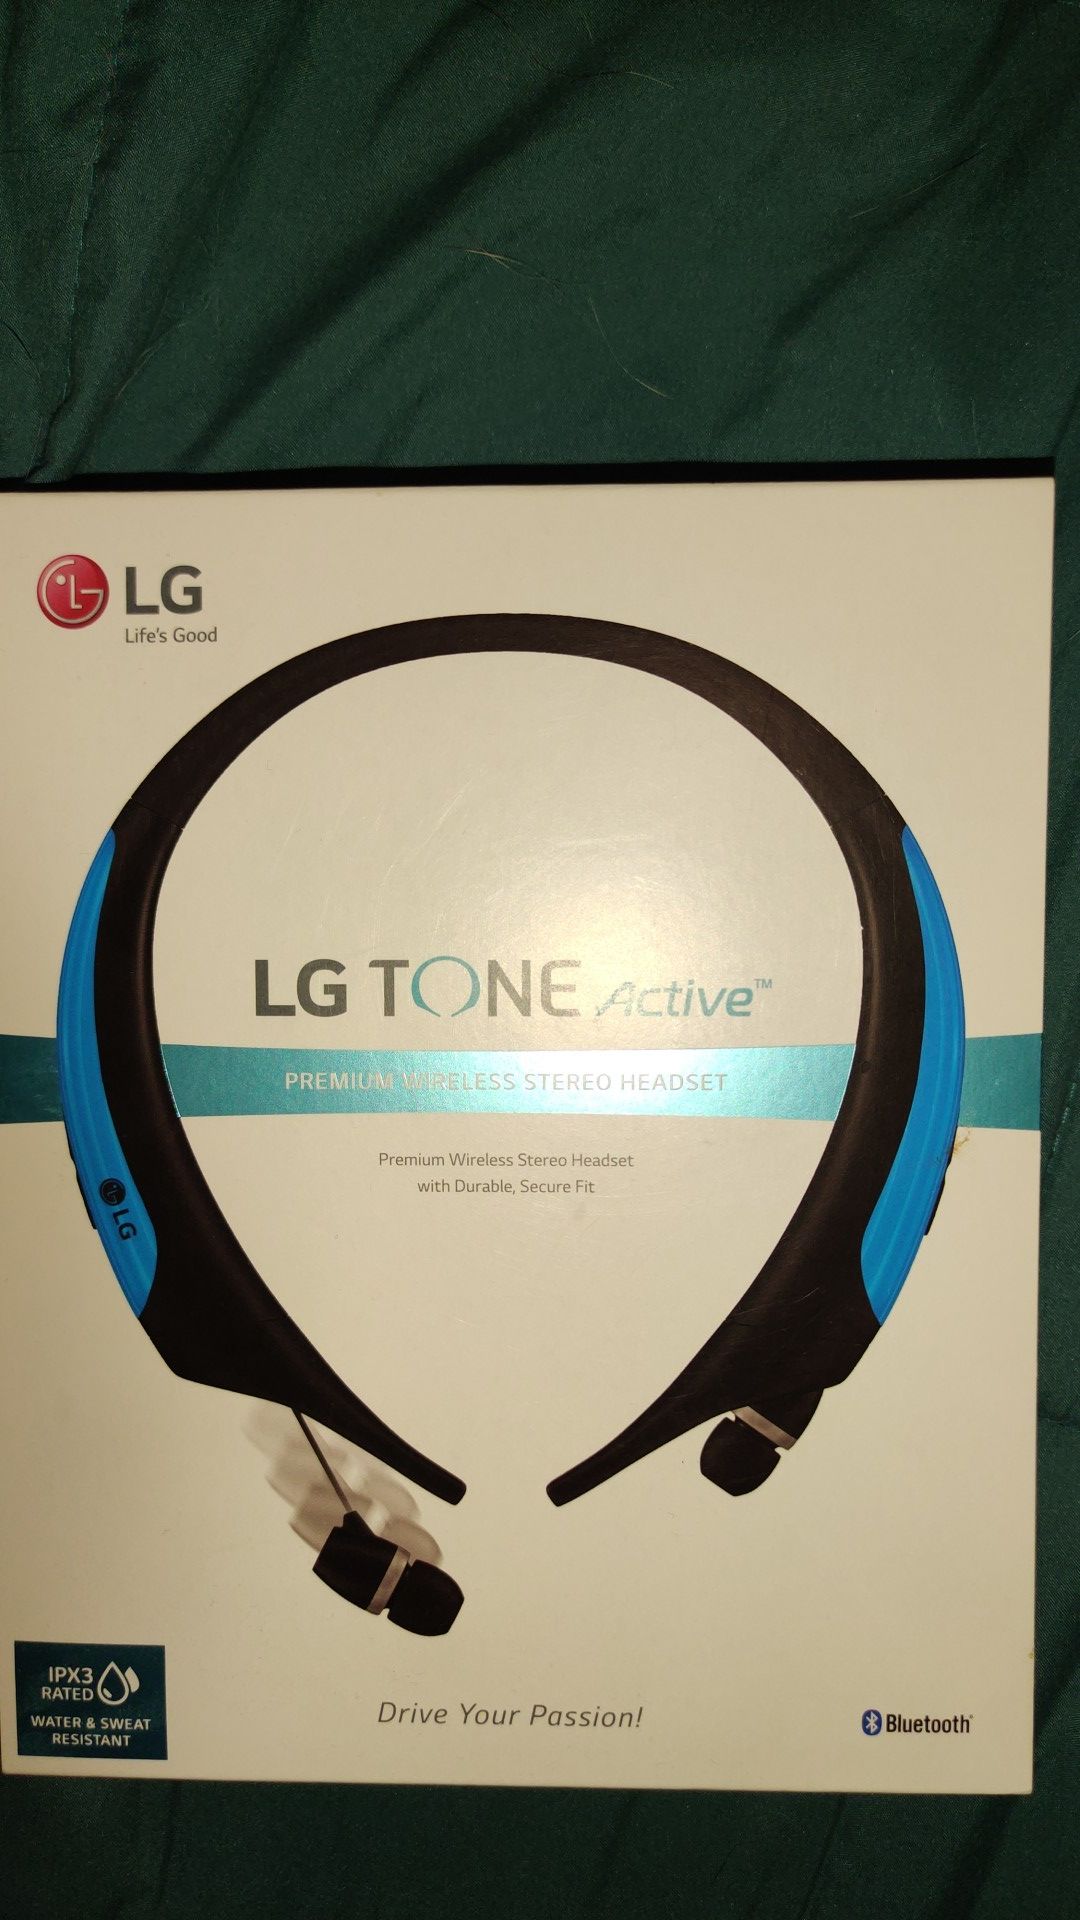 LG tone active